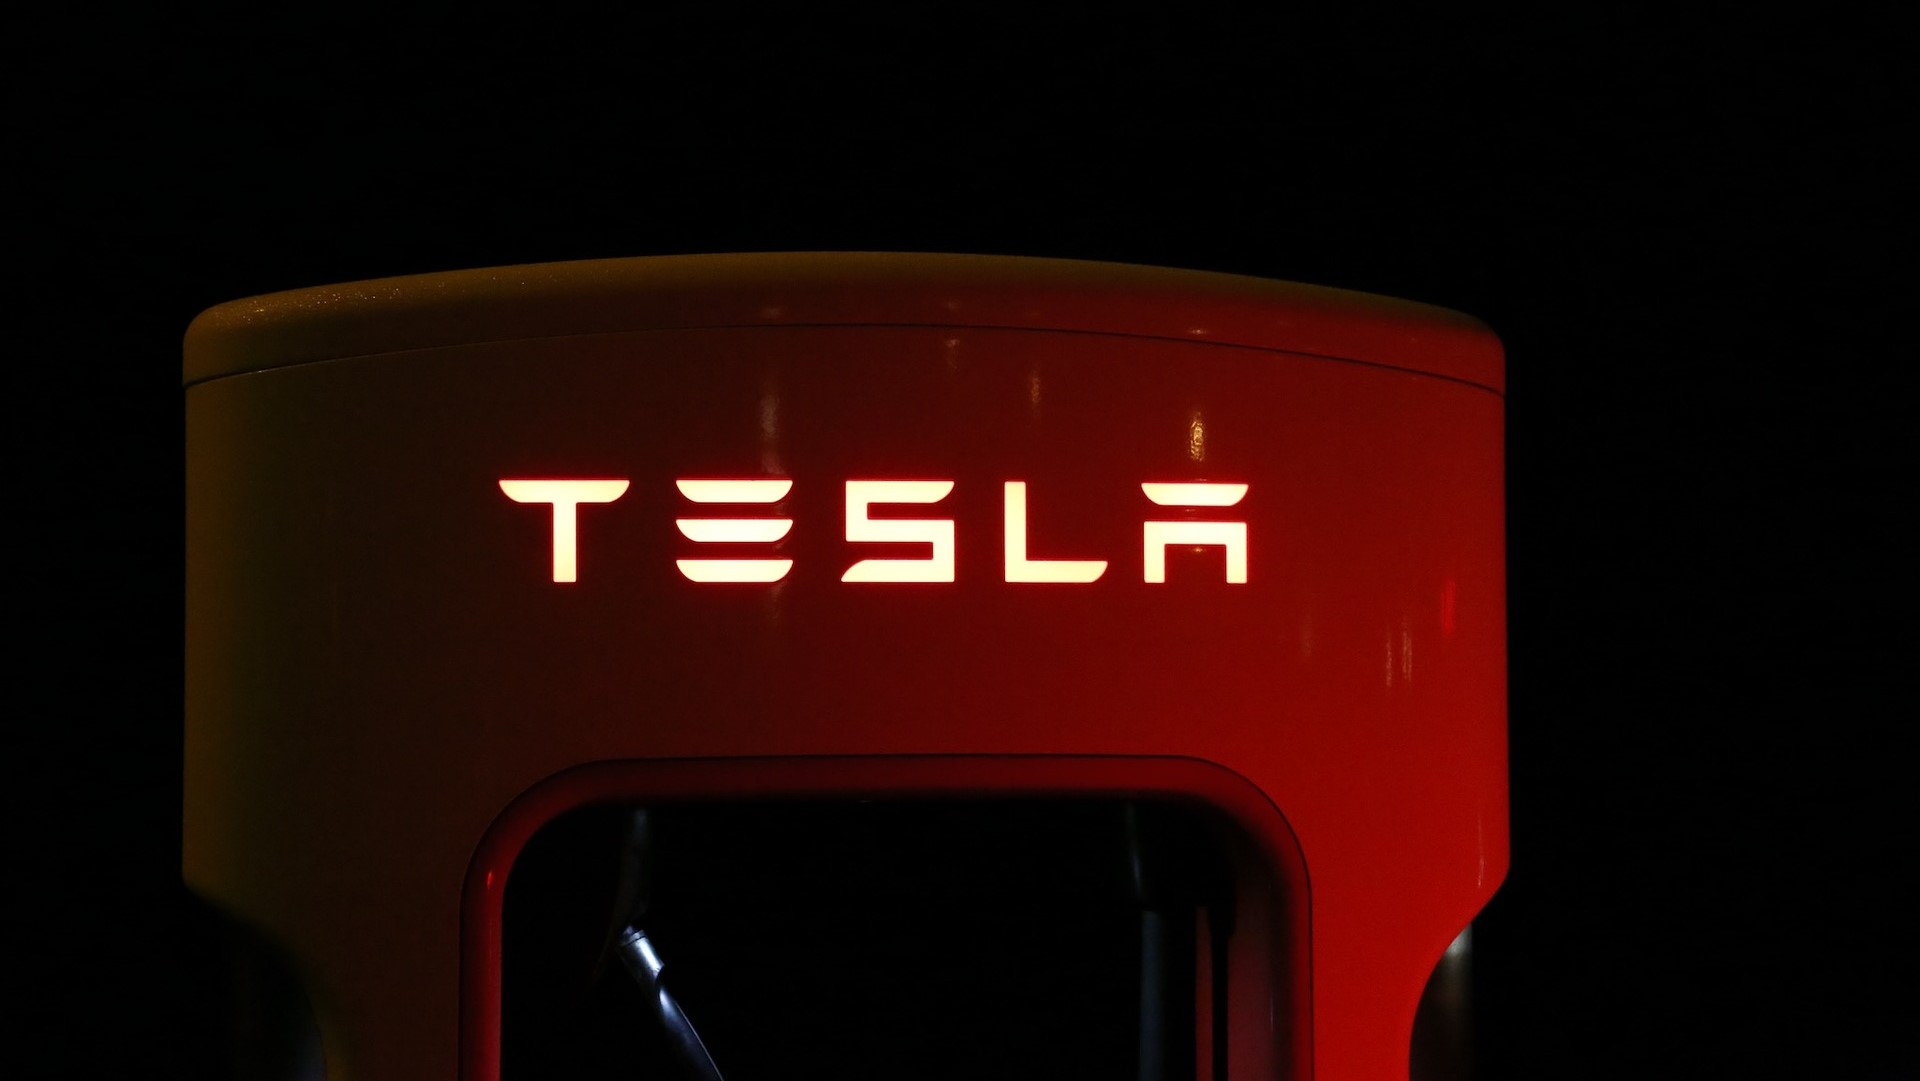 Tesla เปิดสถานีชาร์จที่มีโรงเก็บพลังงานแห่งแรกในประเทศจีน